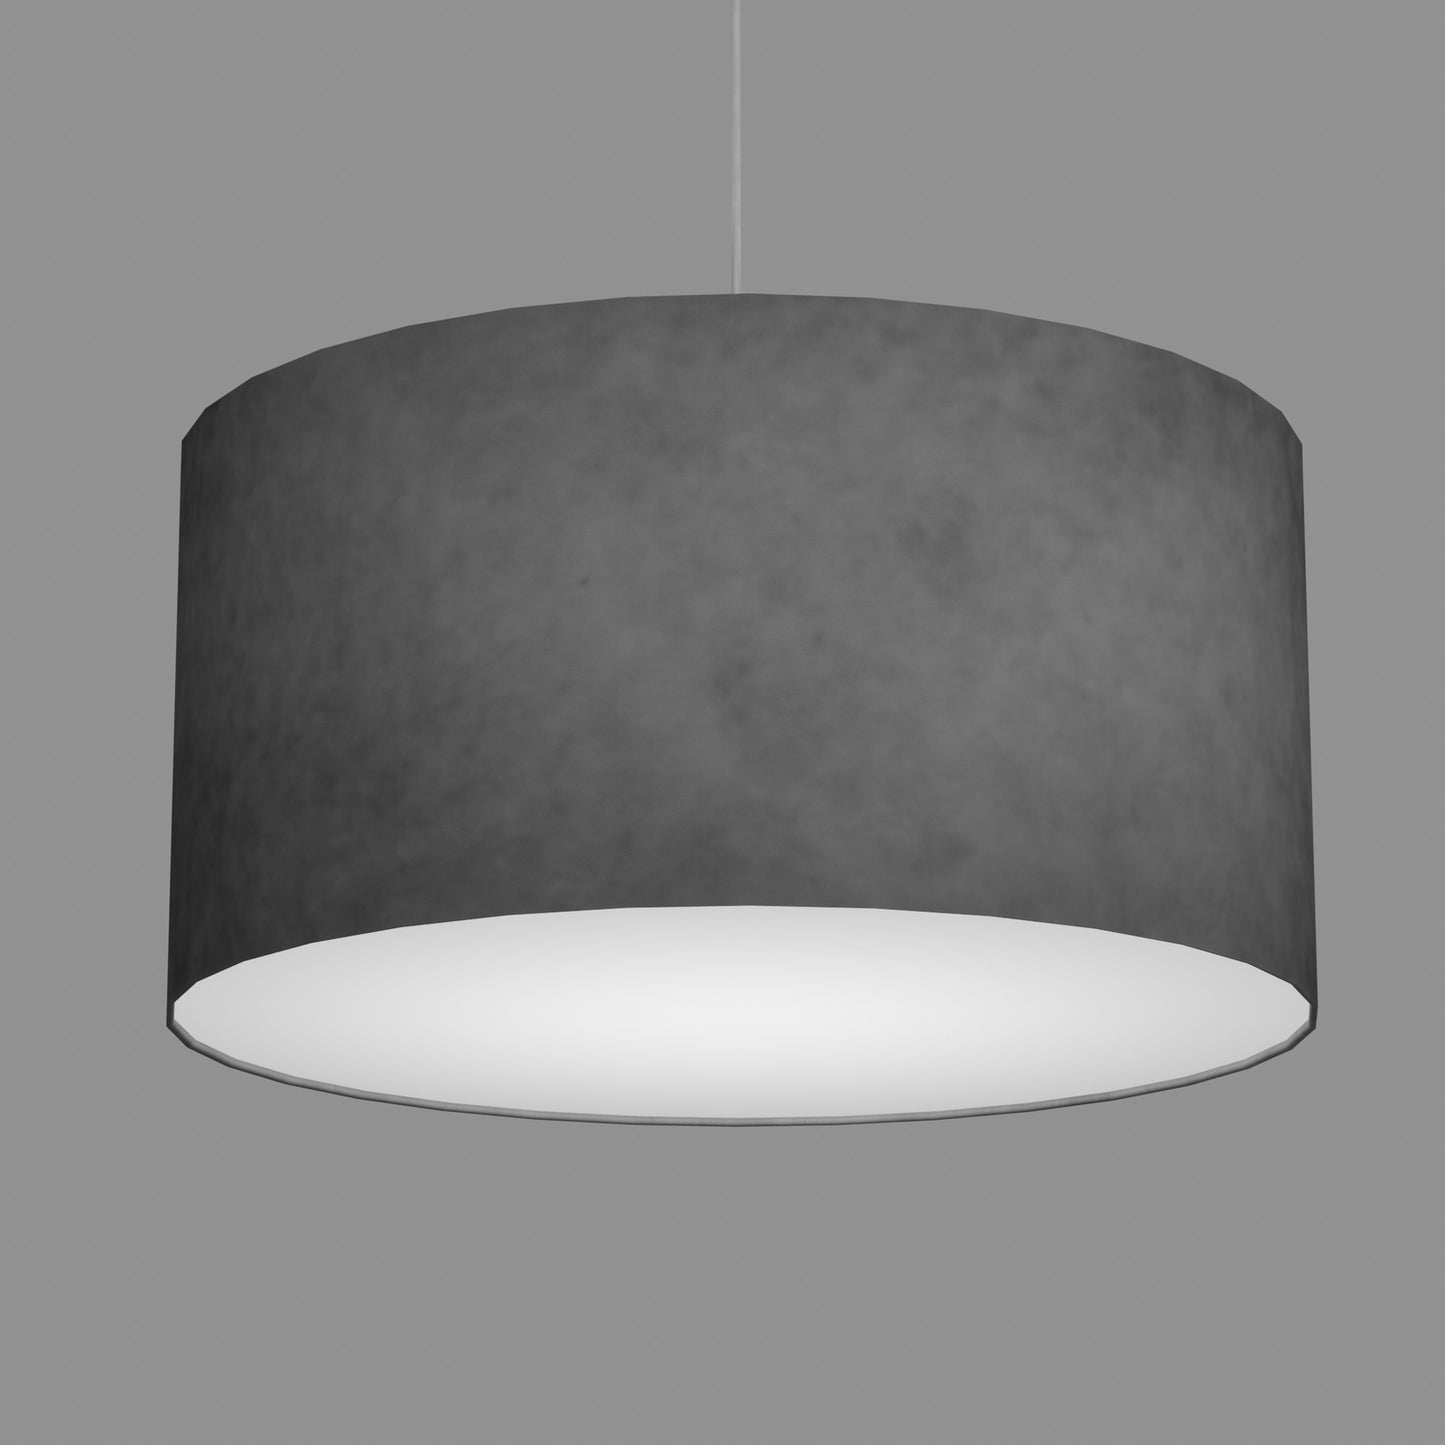 Drum Lamp Shade - P53 - Pewter Grey, 60cm(d) x 30cm(h)